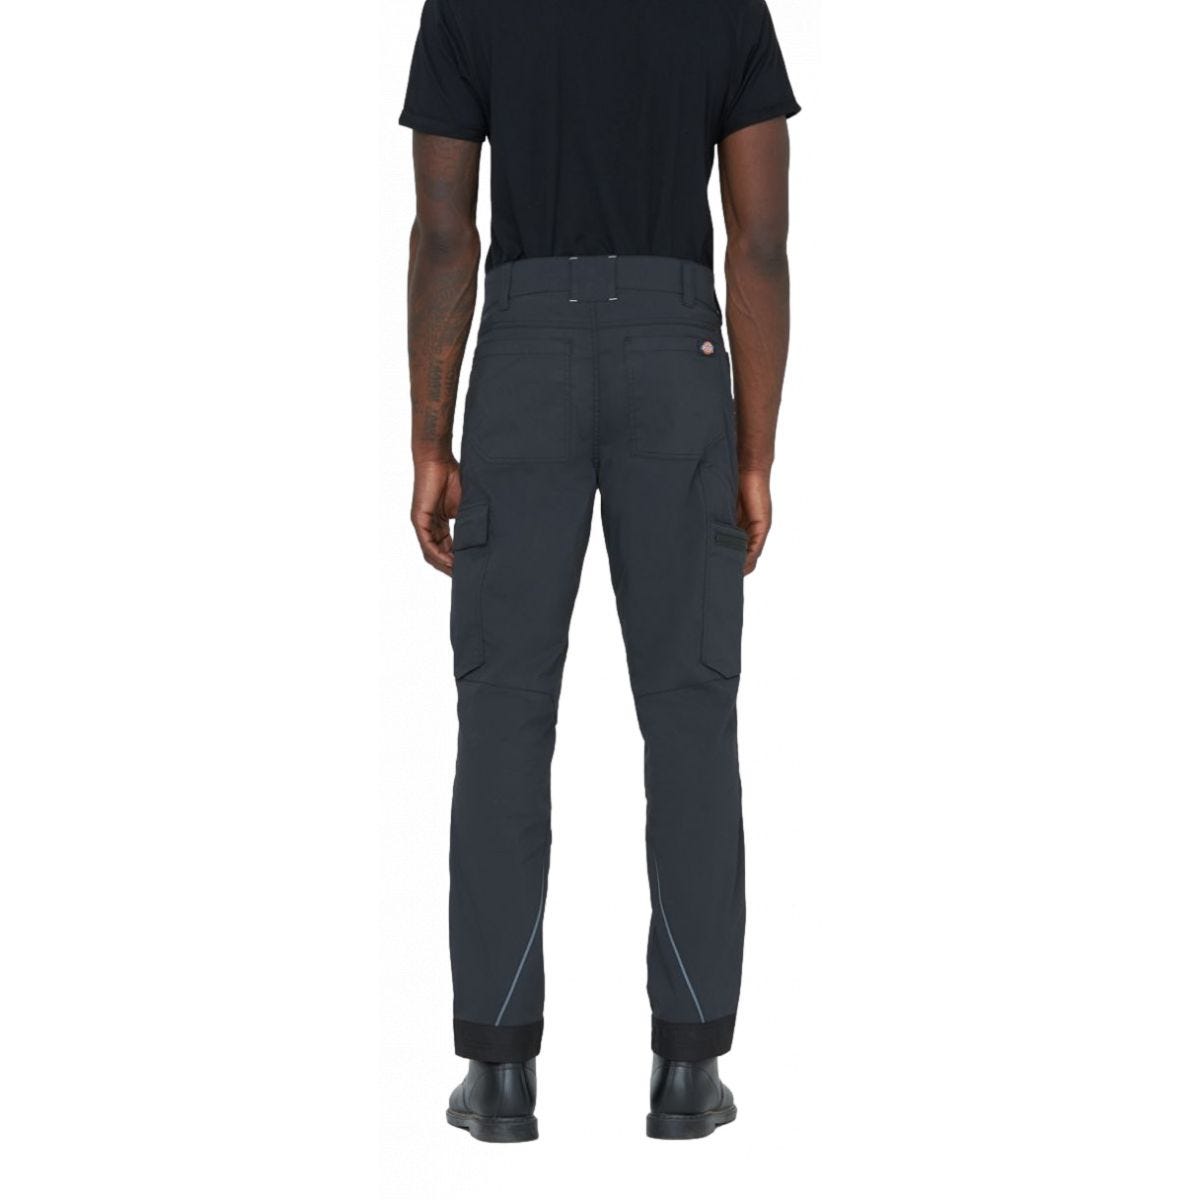 Pantalon léger Flex Noir - Dickies - Taille 44 3